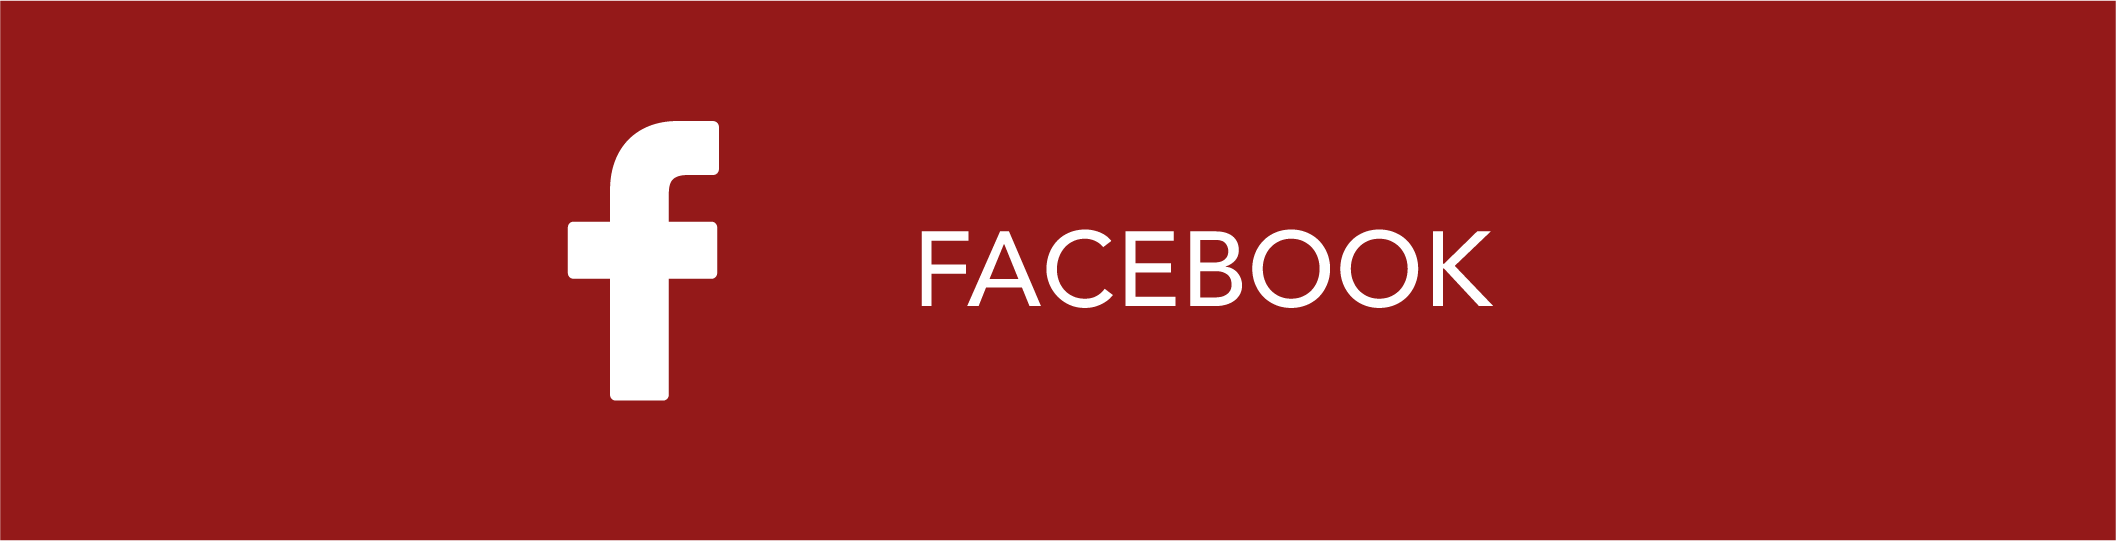 fAcebook